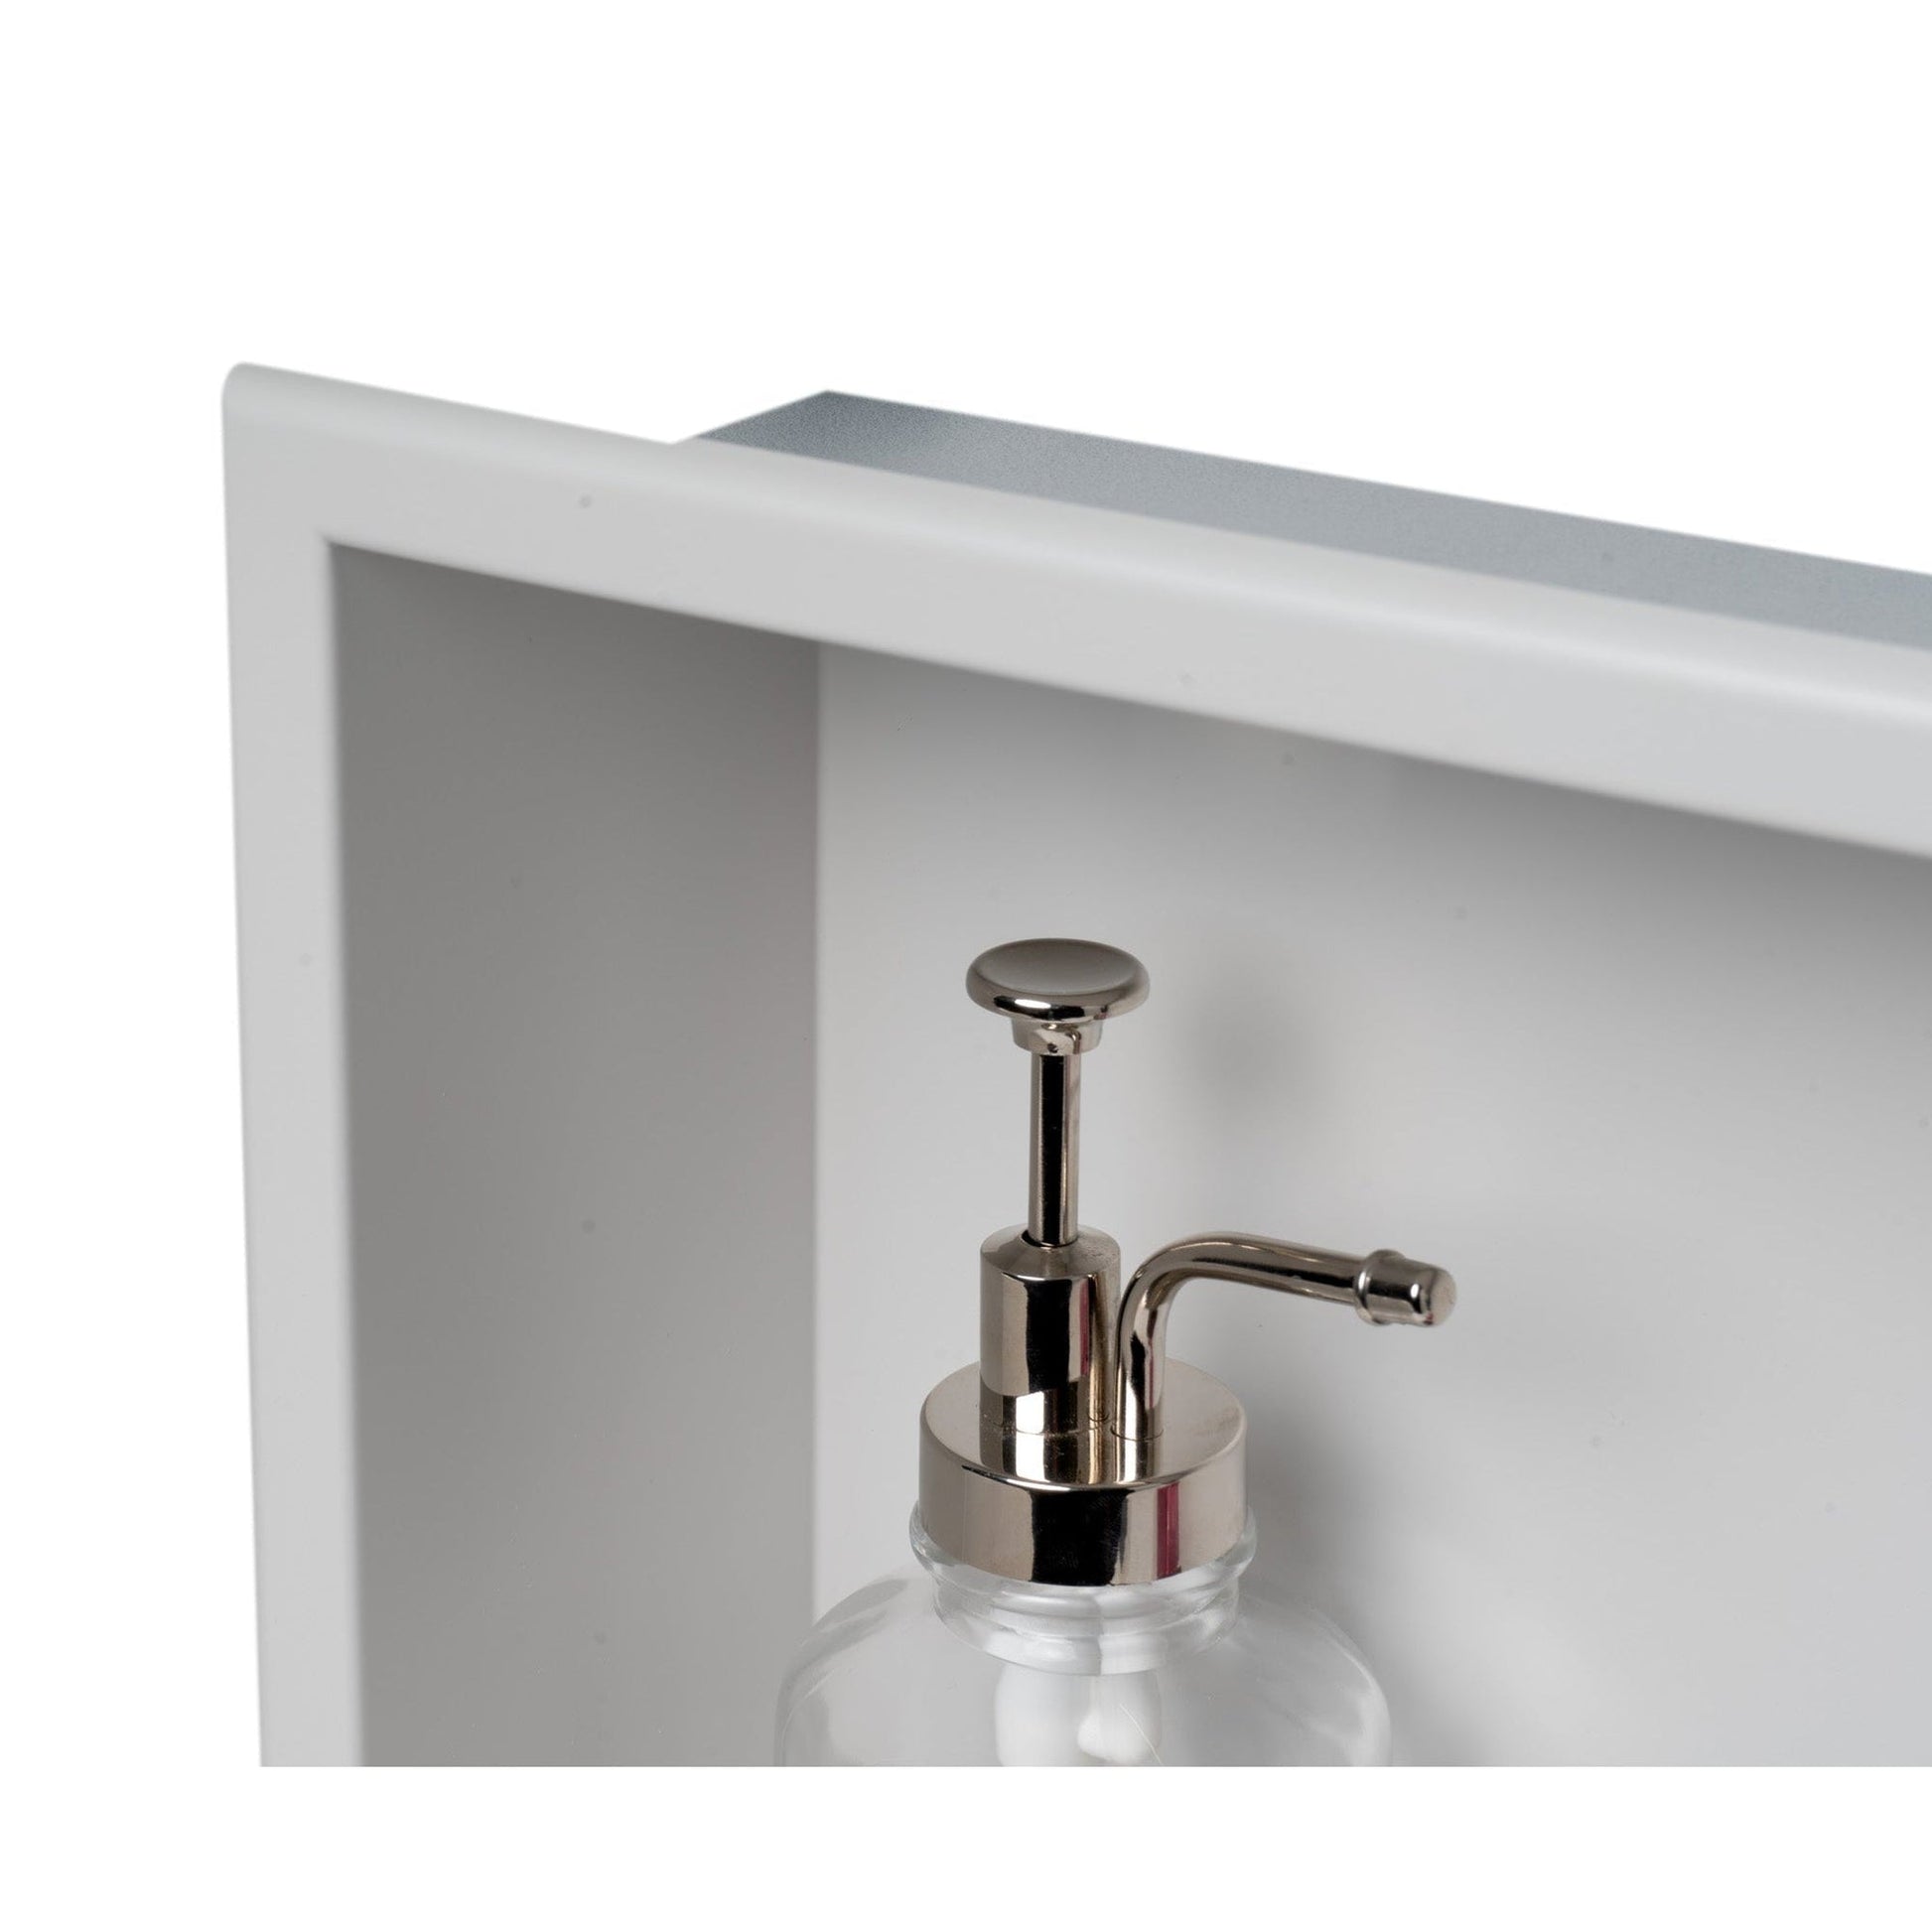 ALFI Brand ABNC2412-W 24" x 12" White Matte Stainless Steel Rectangle Horizontal Single Shelf Bath Shower Niche